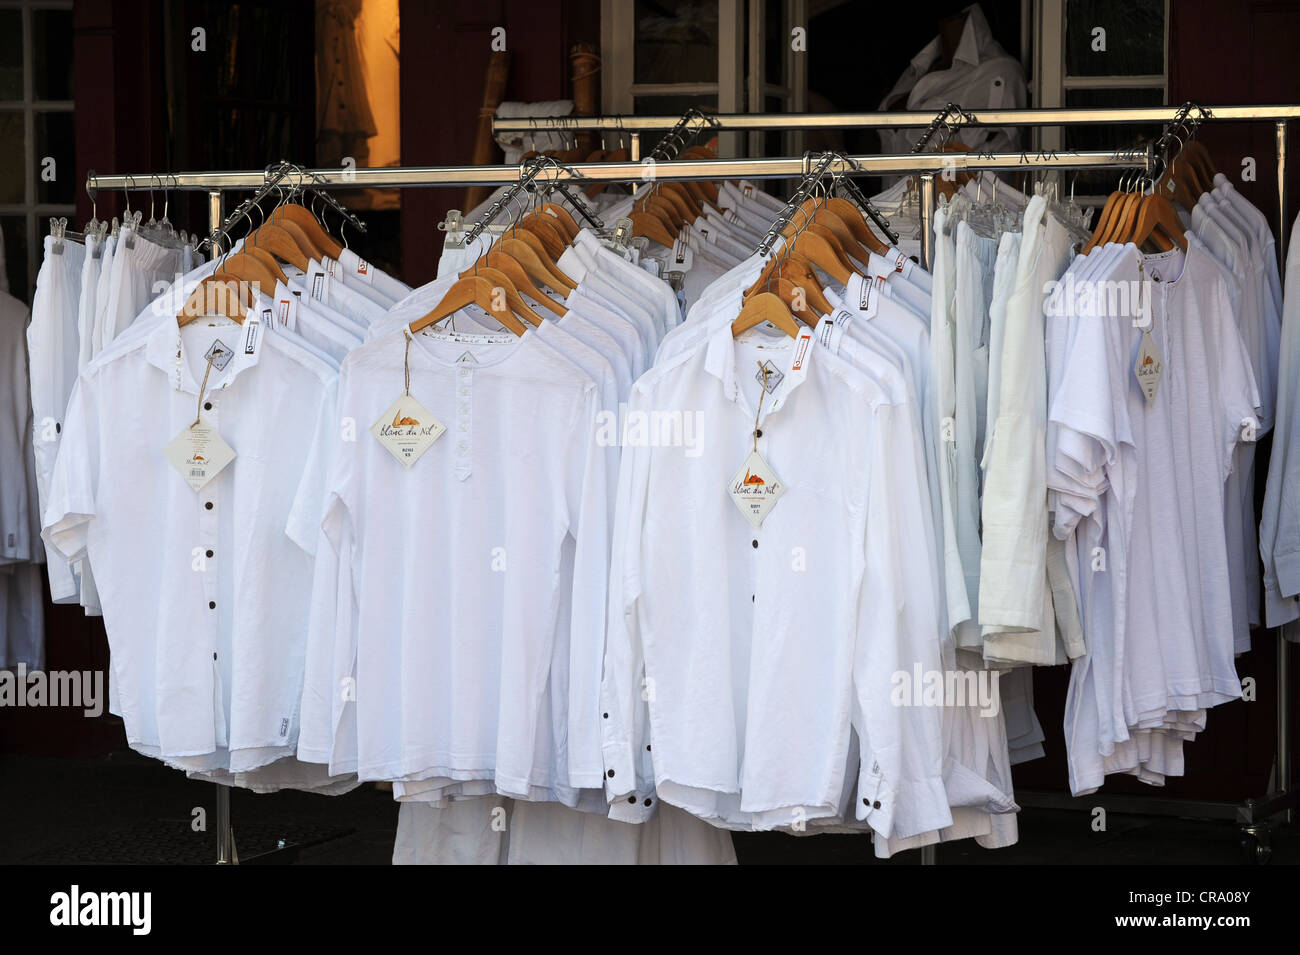 All white shirts on sale 'Blanc du Nil' Stock Photo - Alamy